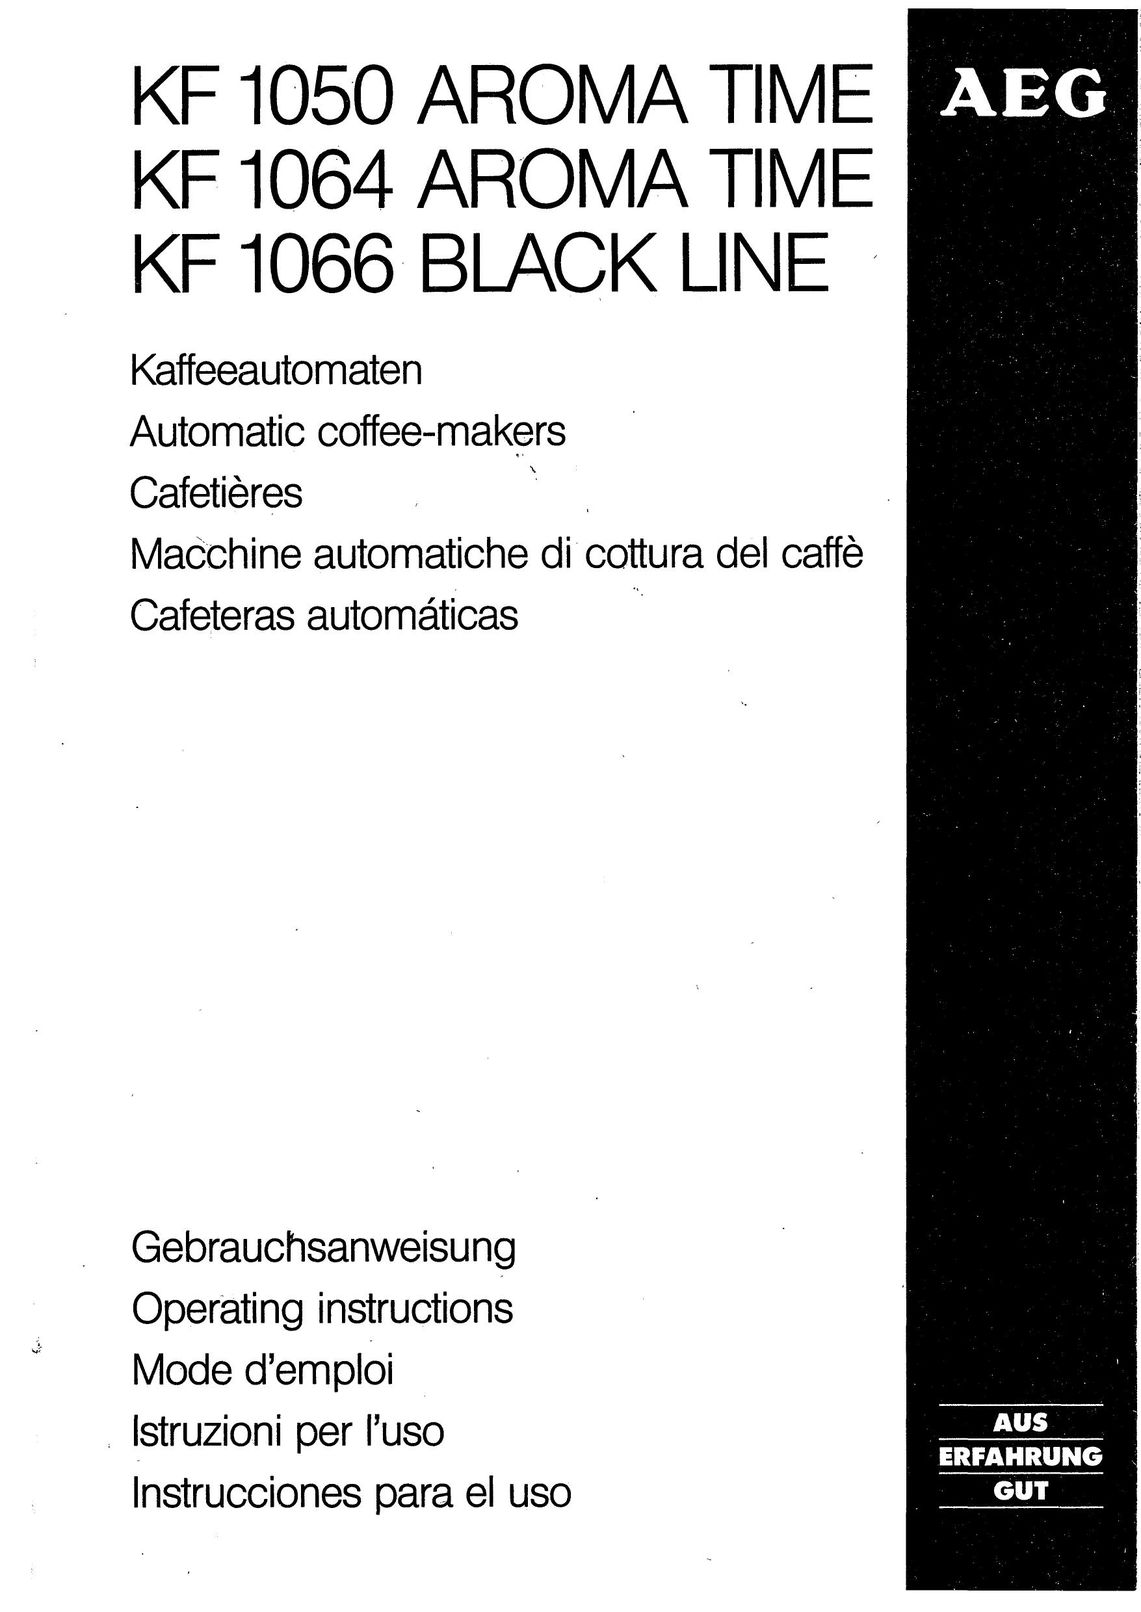 AEG KF 1050 Coffeemaker User Manual